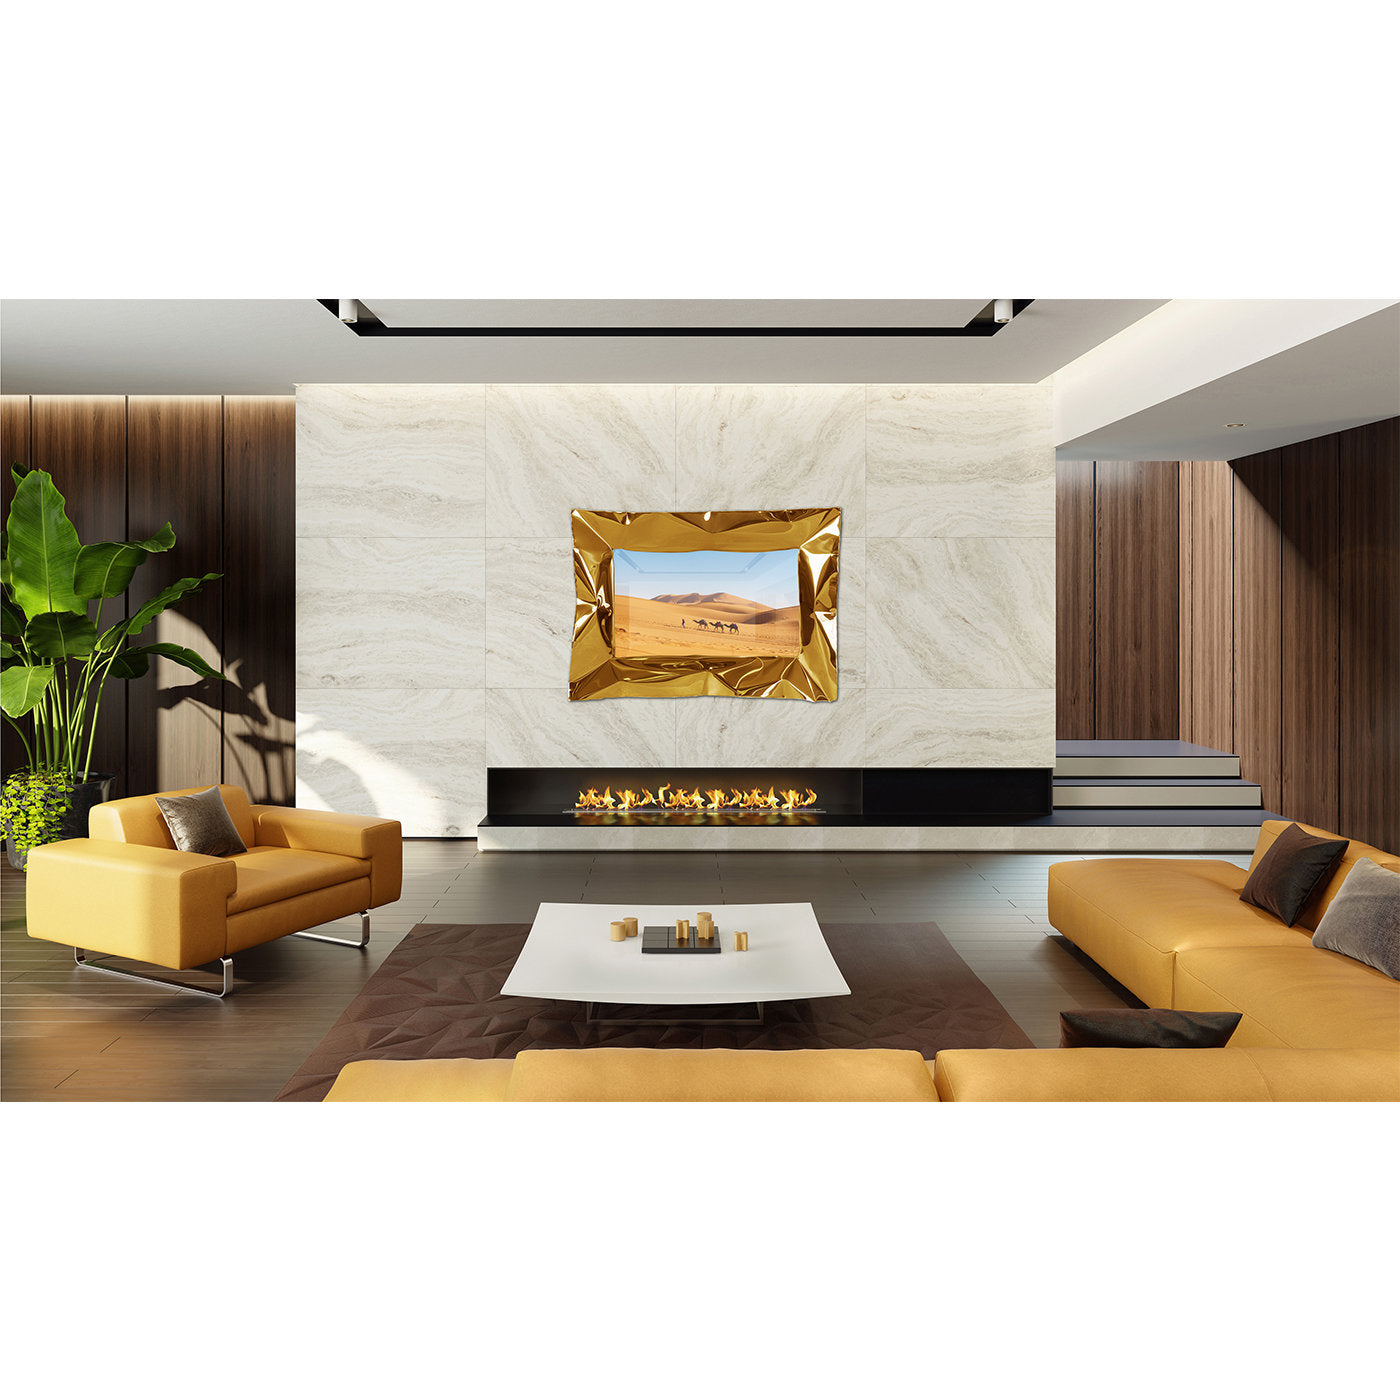 Lux Gold Mirror TV de Marco Mazzei - Vista alternativa 1